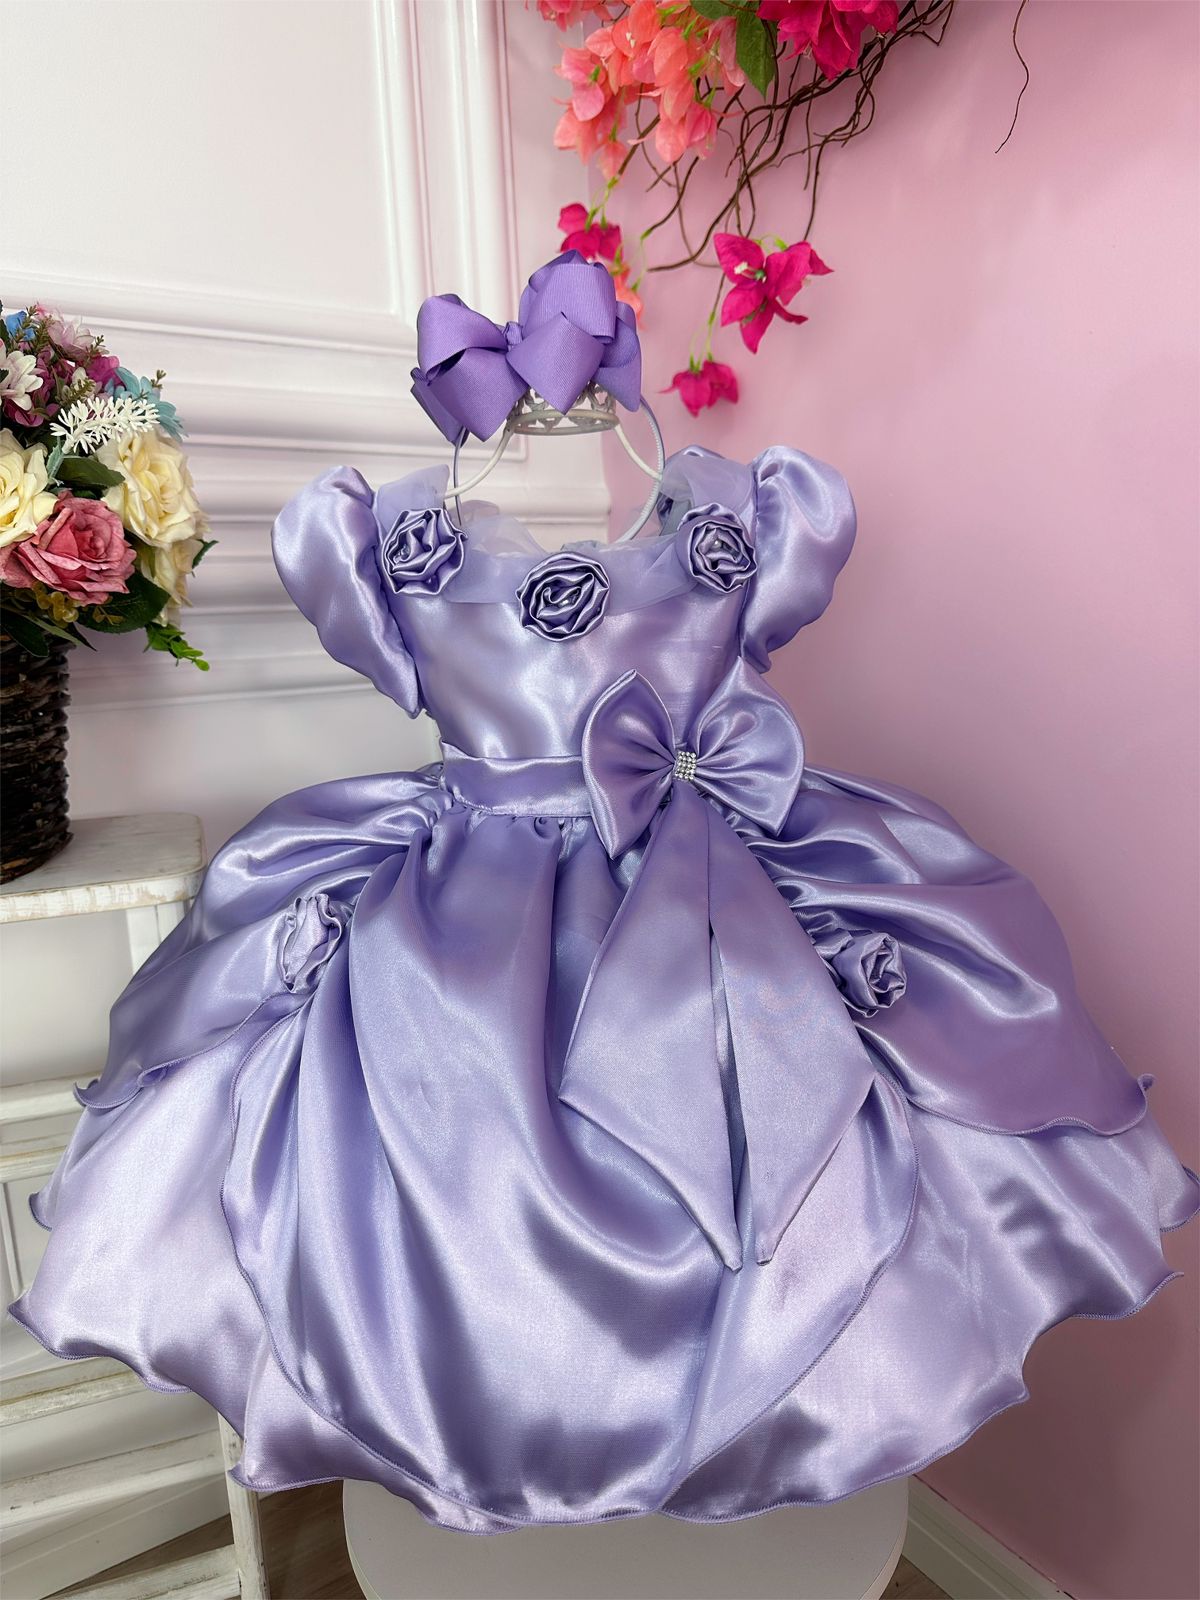 Vestido Infantil Sofia Rapunzel Lilás Aplique Flor Princesas